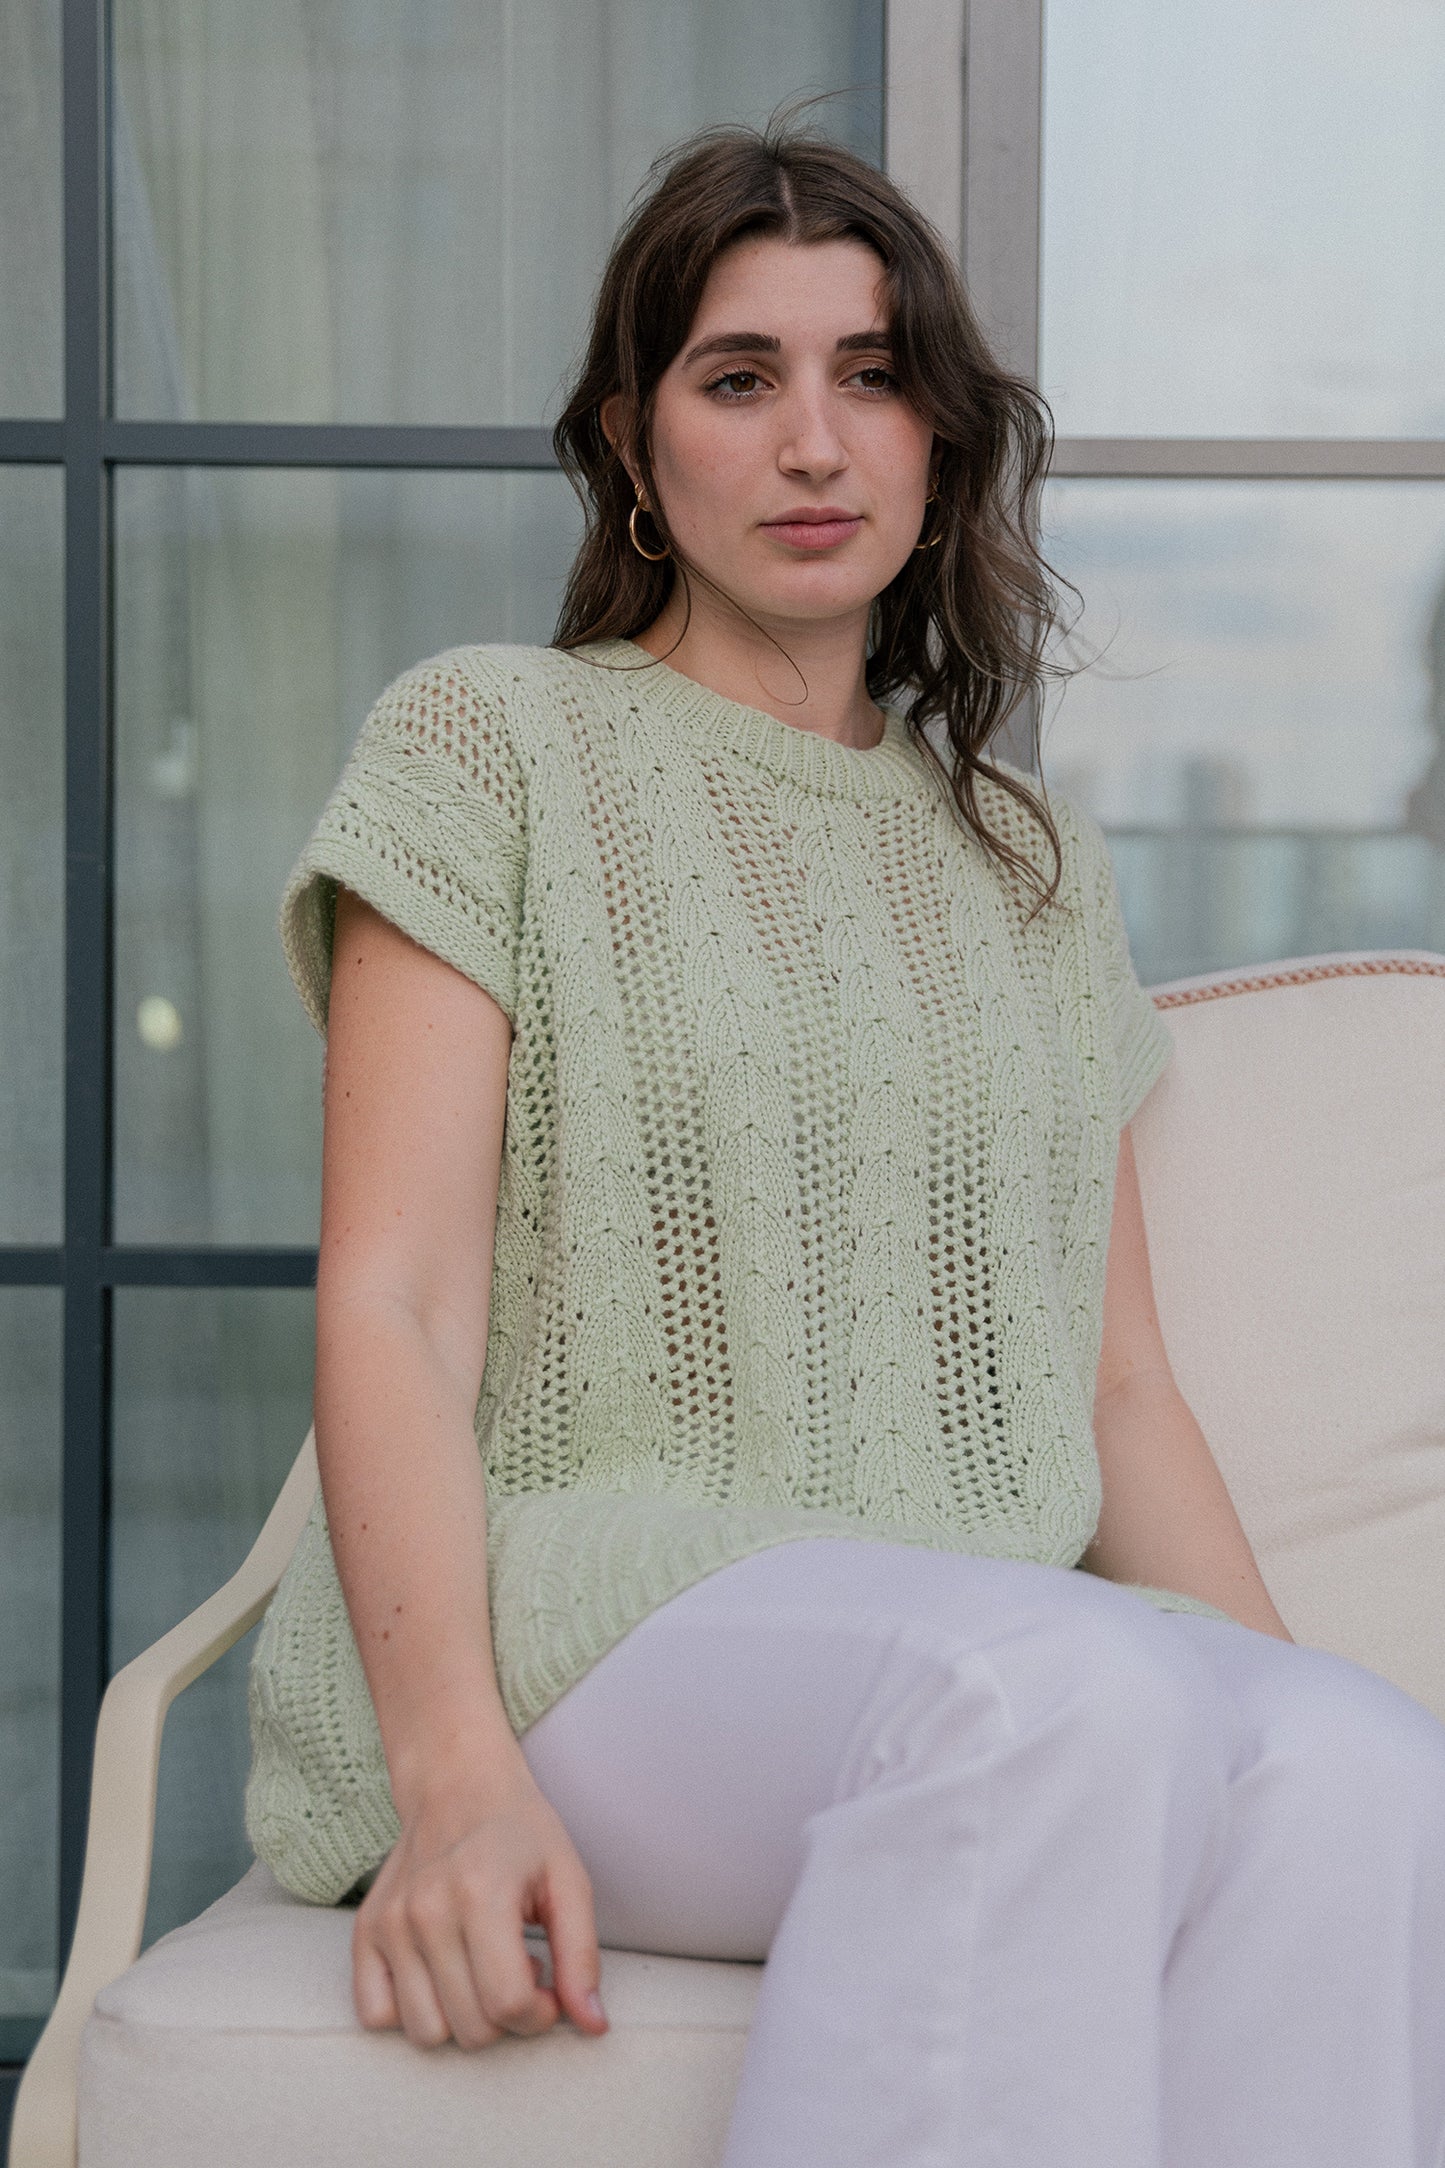 Celosia Short Sleeve Sweater